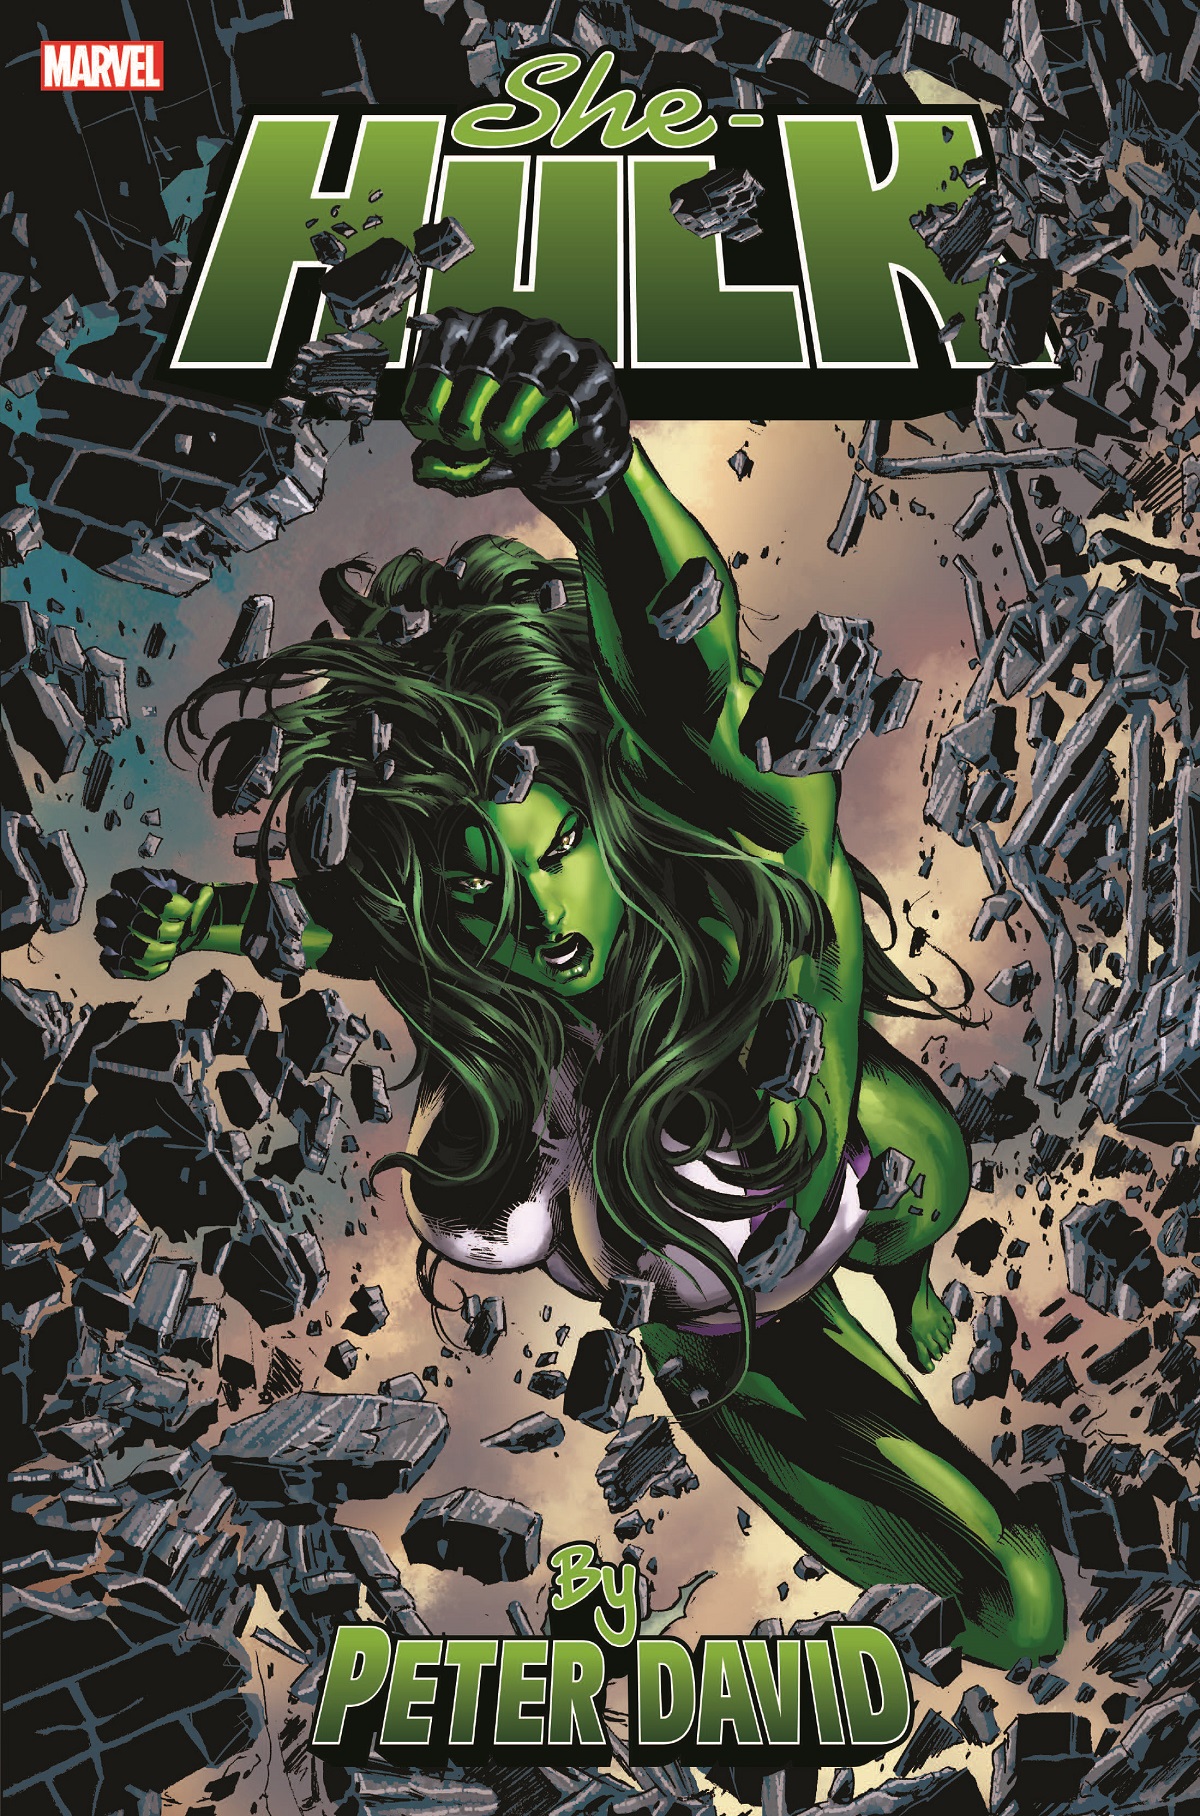 She hulk peter david